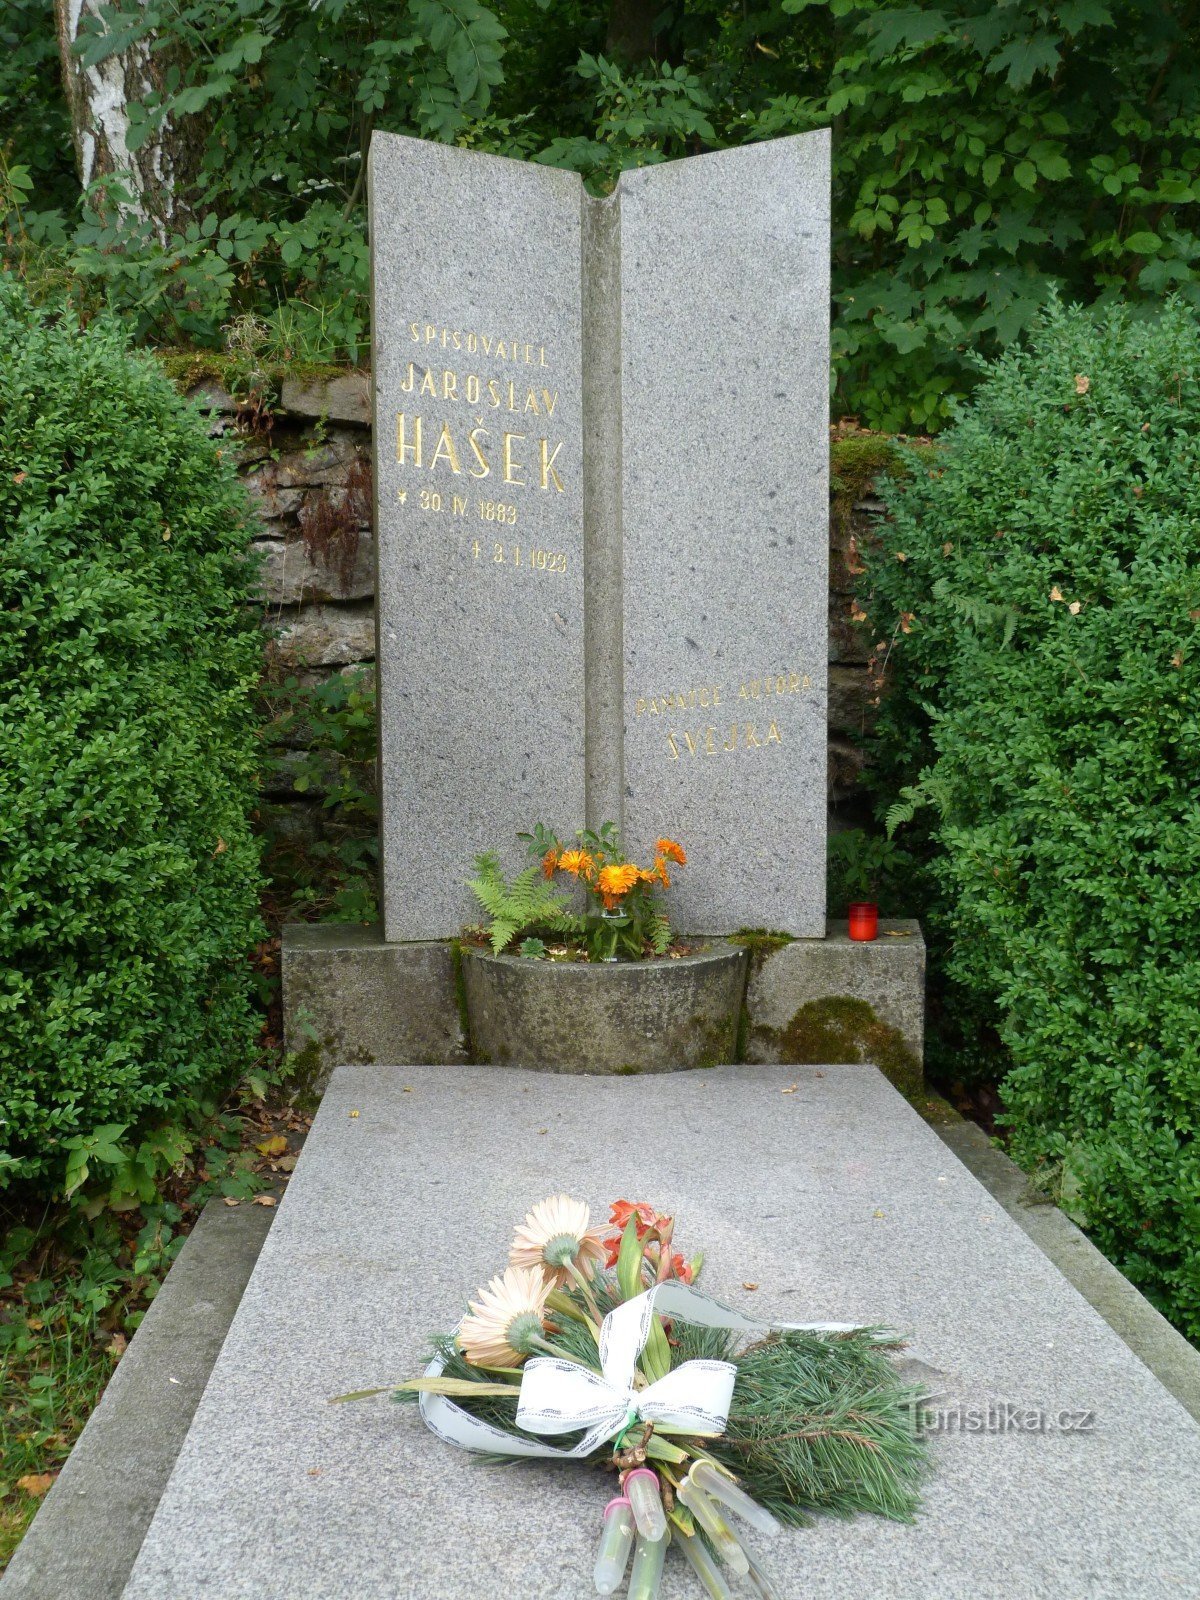 Casa e memorial de Jaroslav Hašek